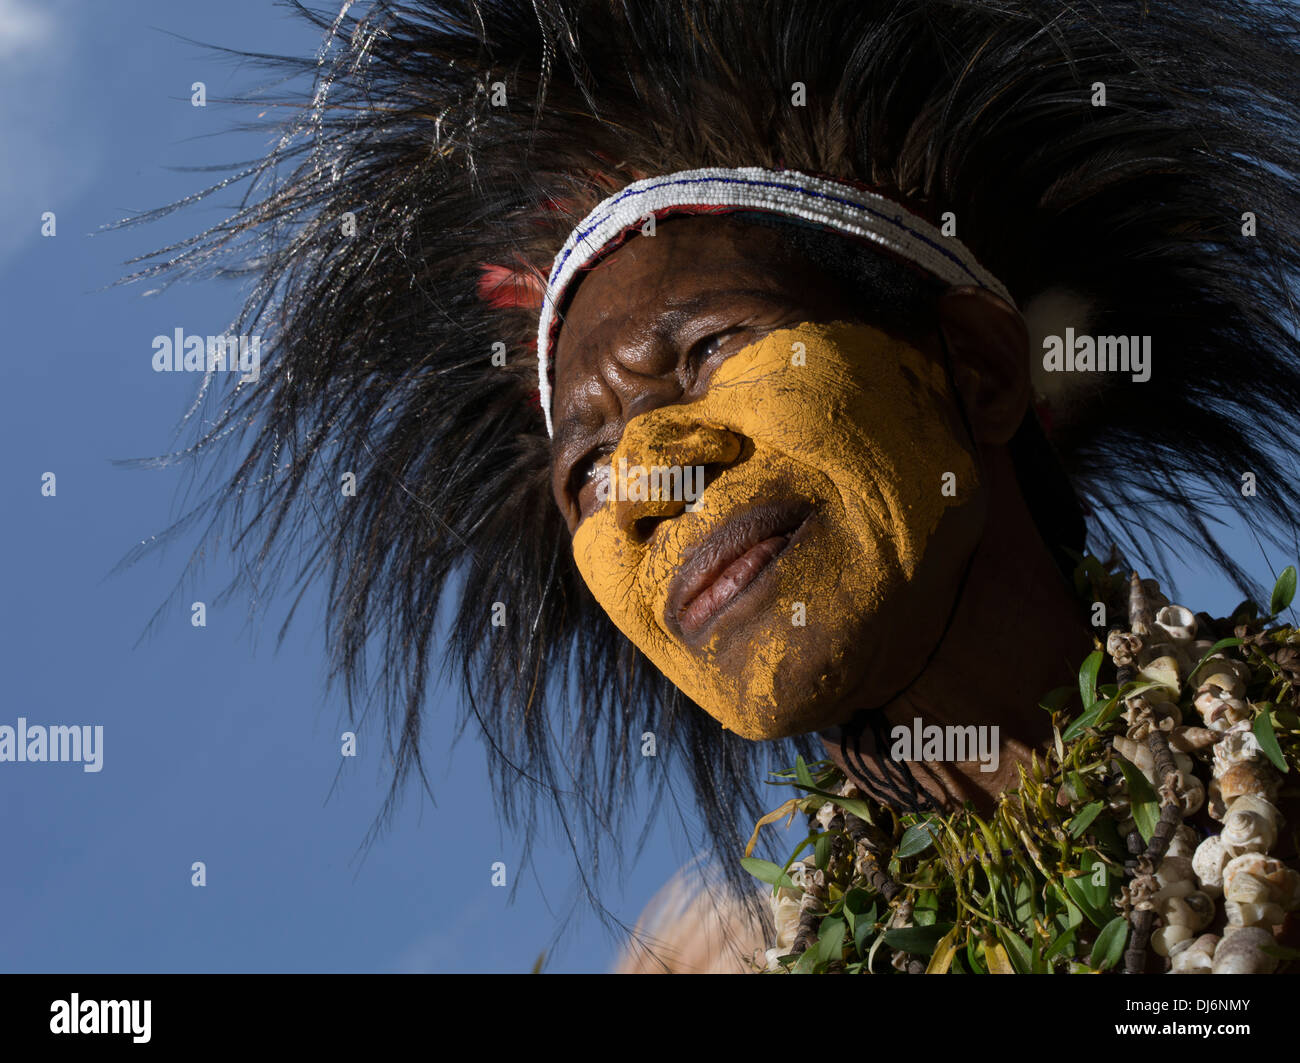 Omena Singsing Group, Provinz Eastern Highlands - Goroka Show, Papua New Guinea Stockfoto